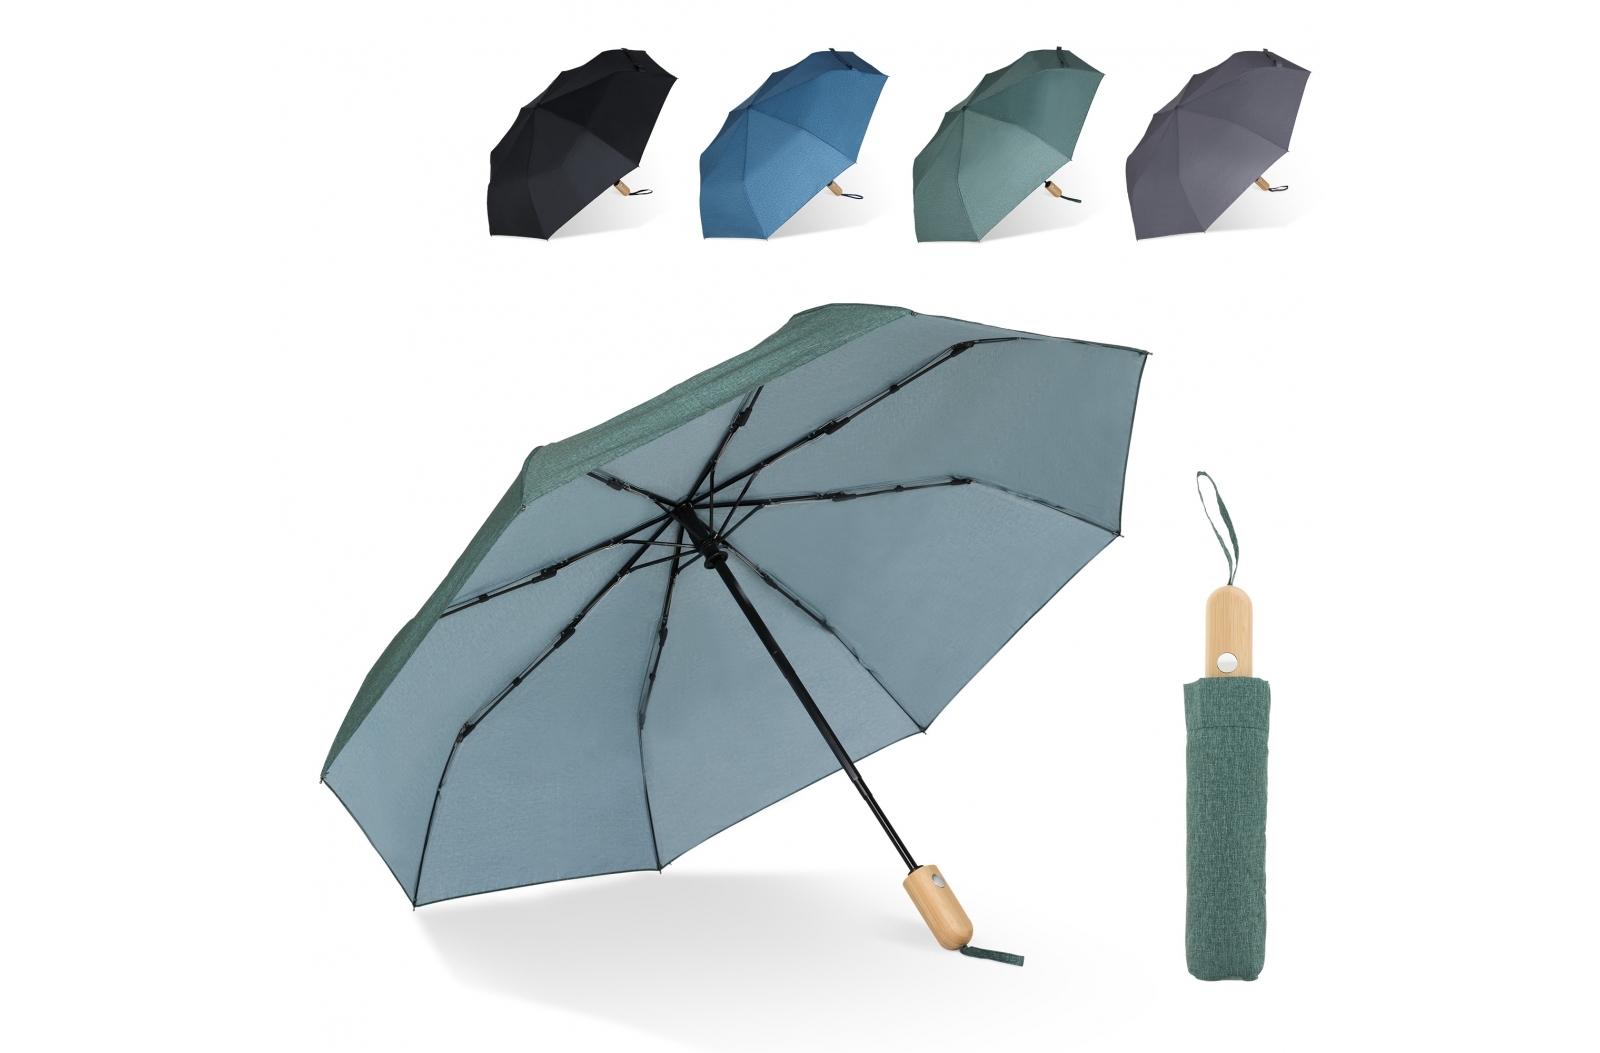 R-PET Fiberglass Umbrella with Genuine Wood Handle - Banks